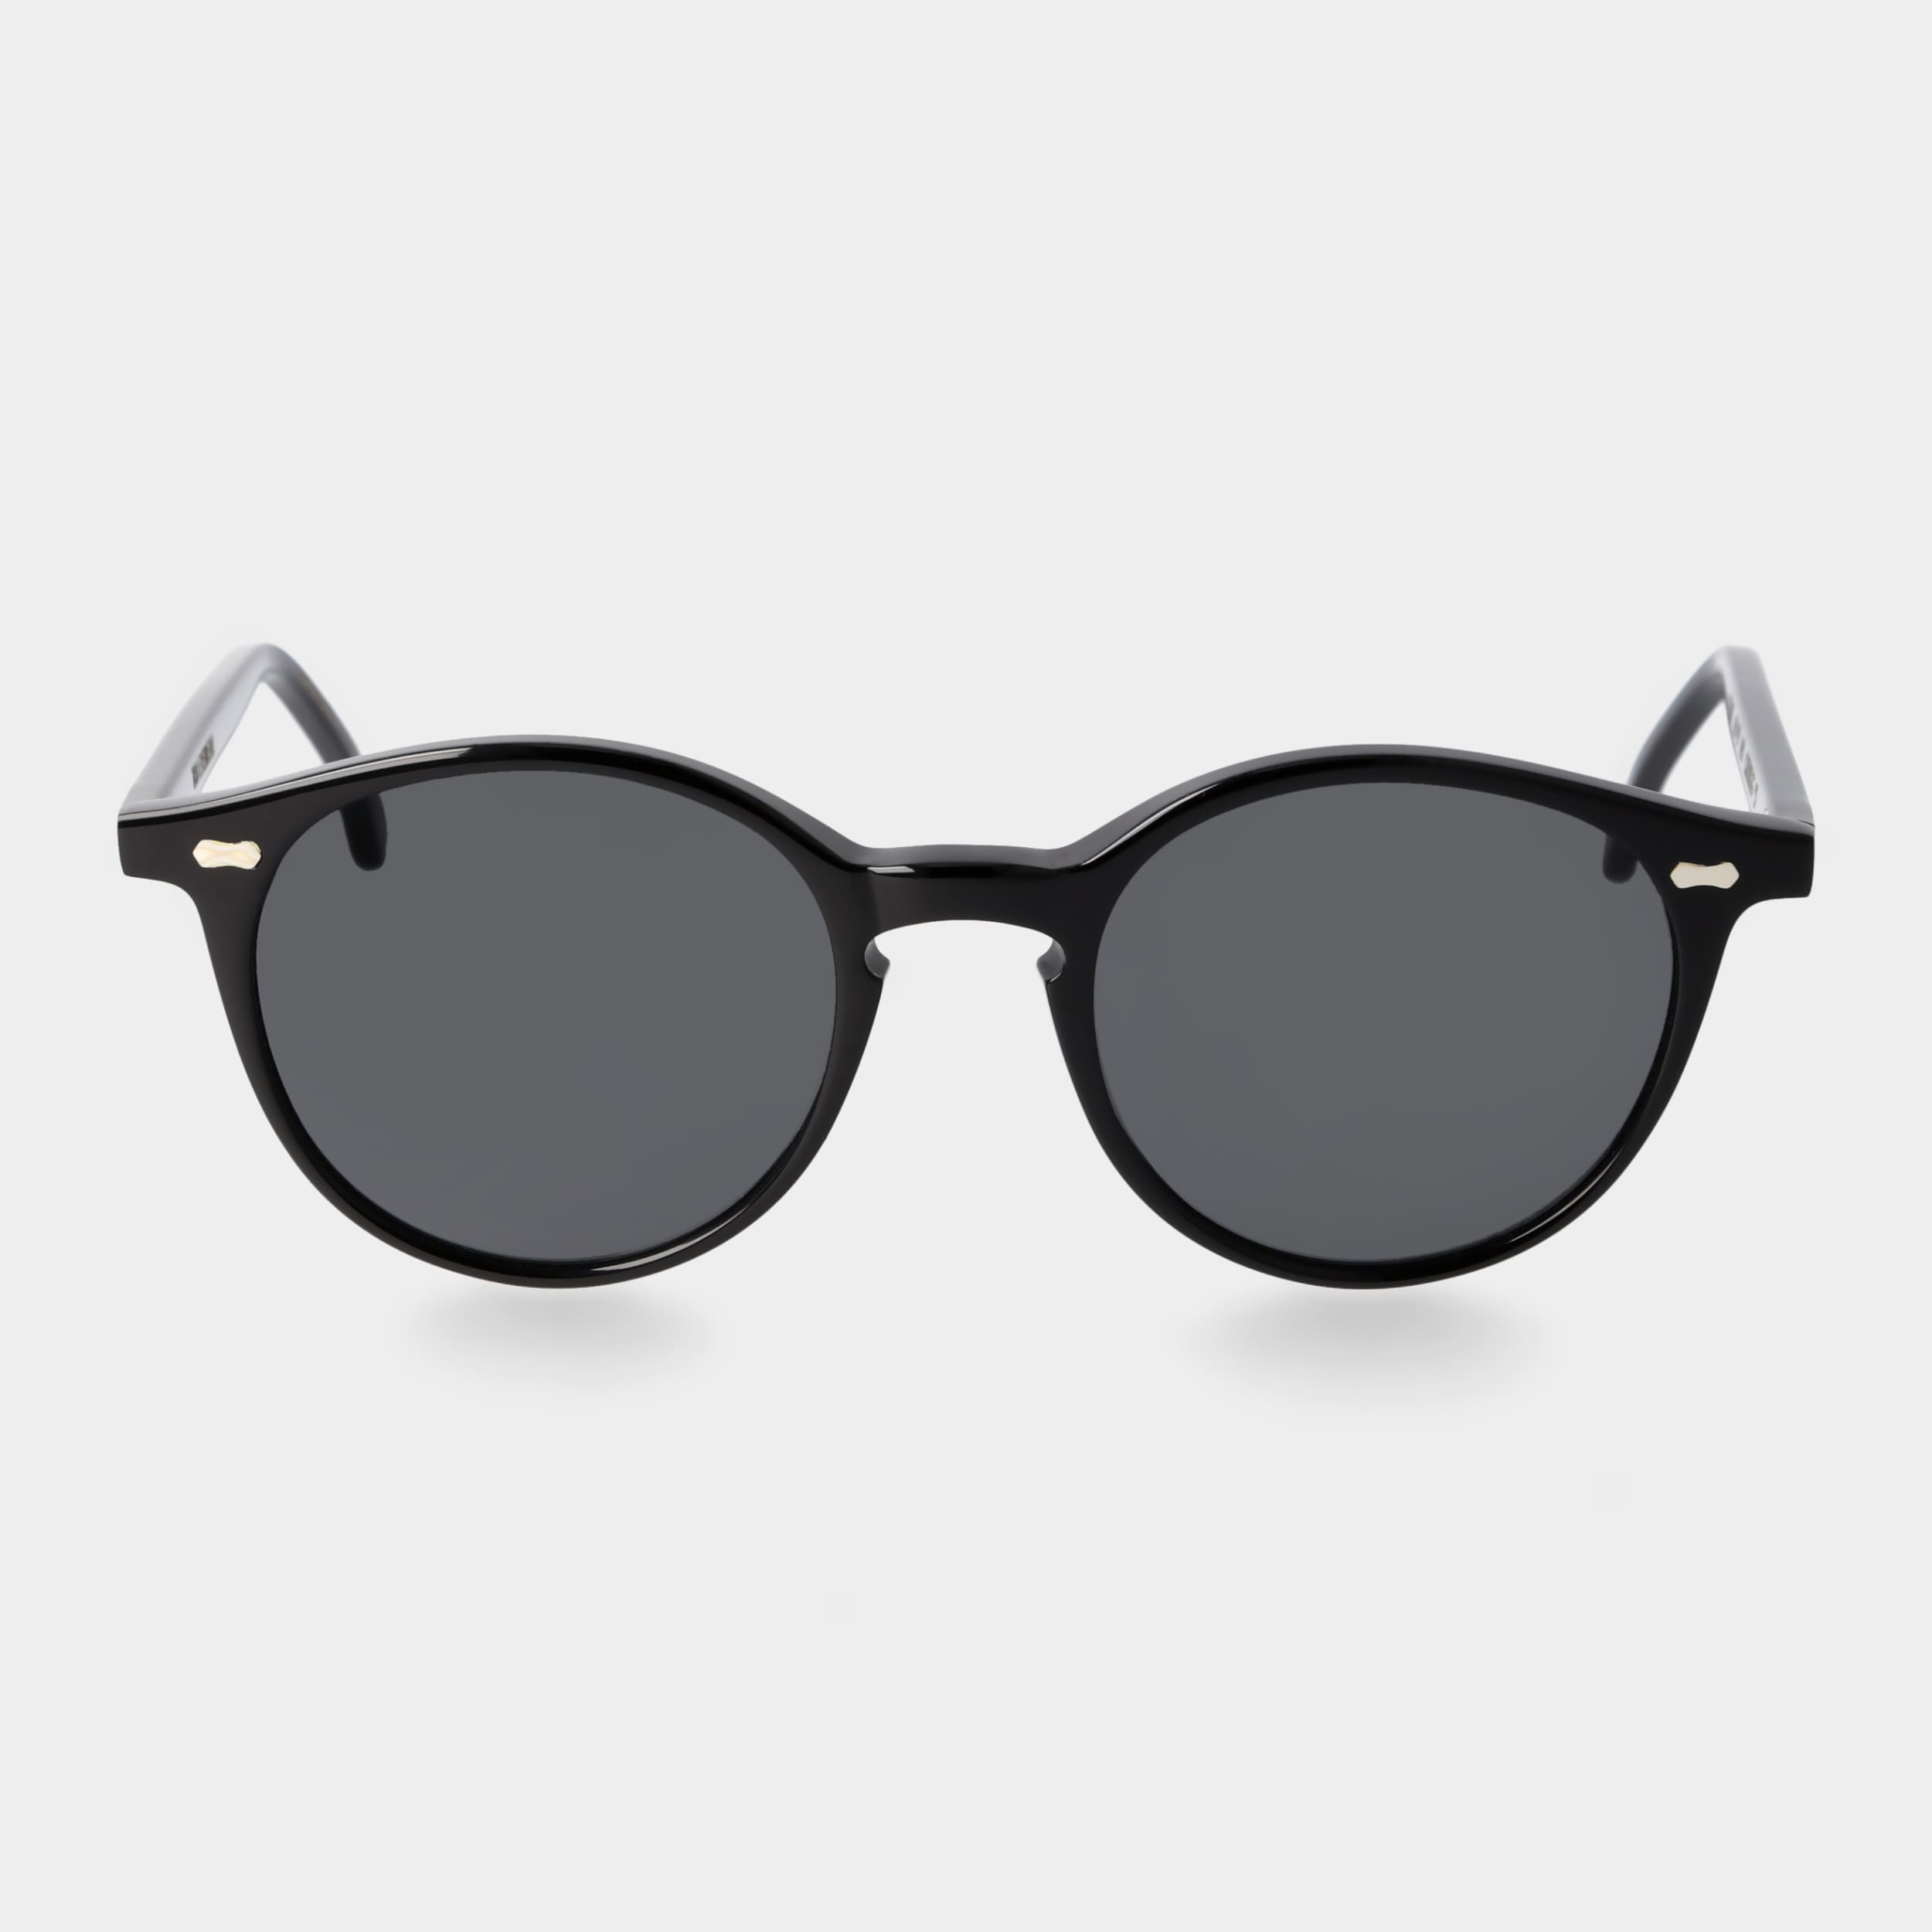 sunglasses-cran-eco-black-gradient-grey-sustainable-tbd-eyewear-front